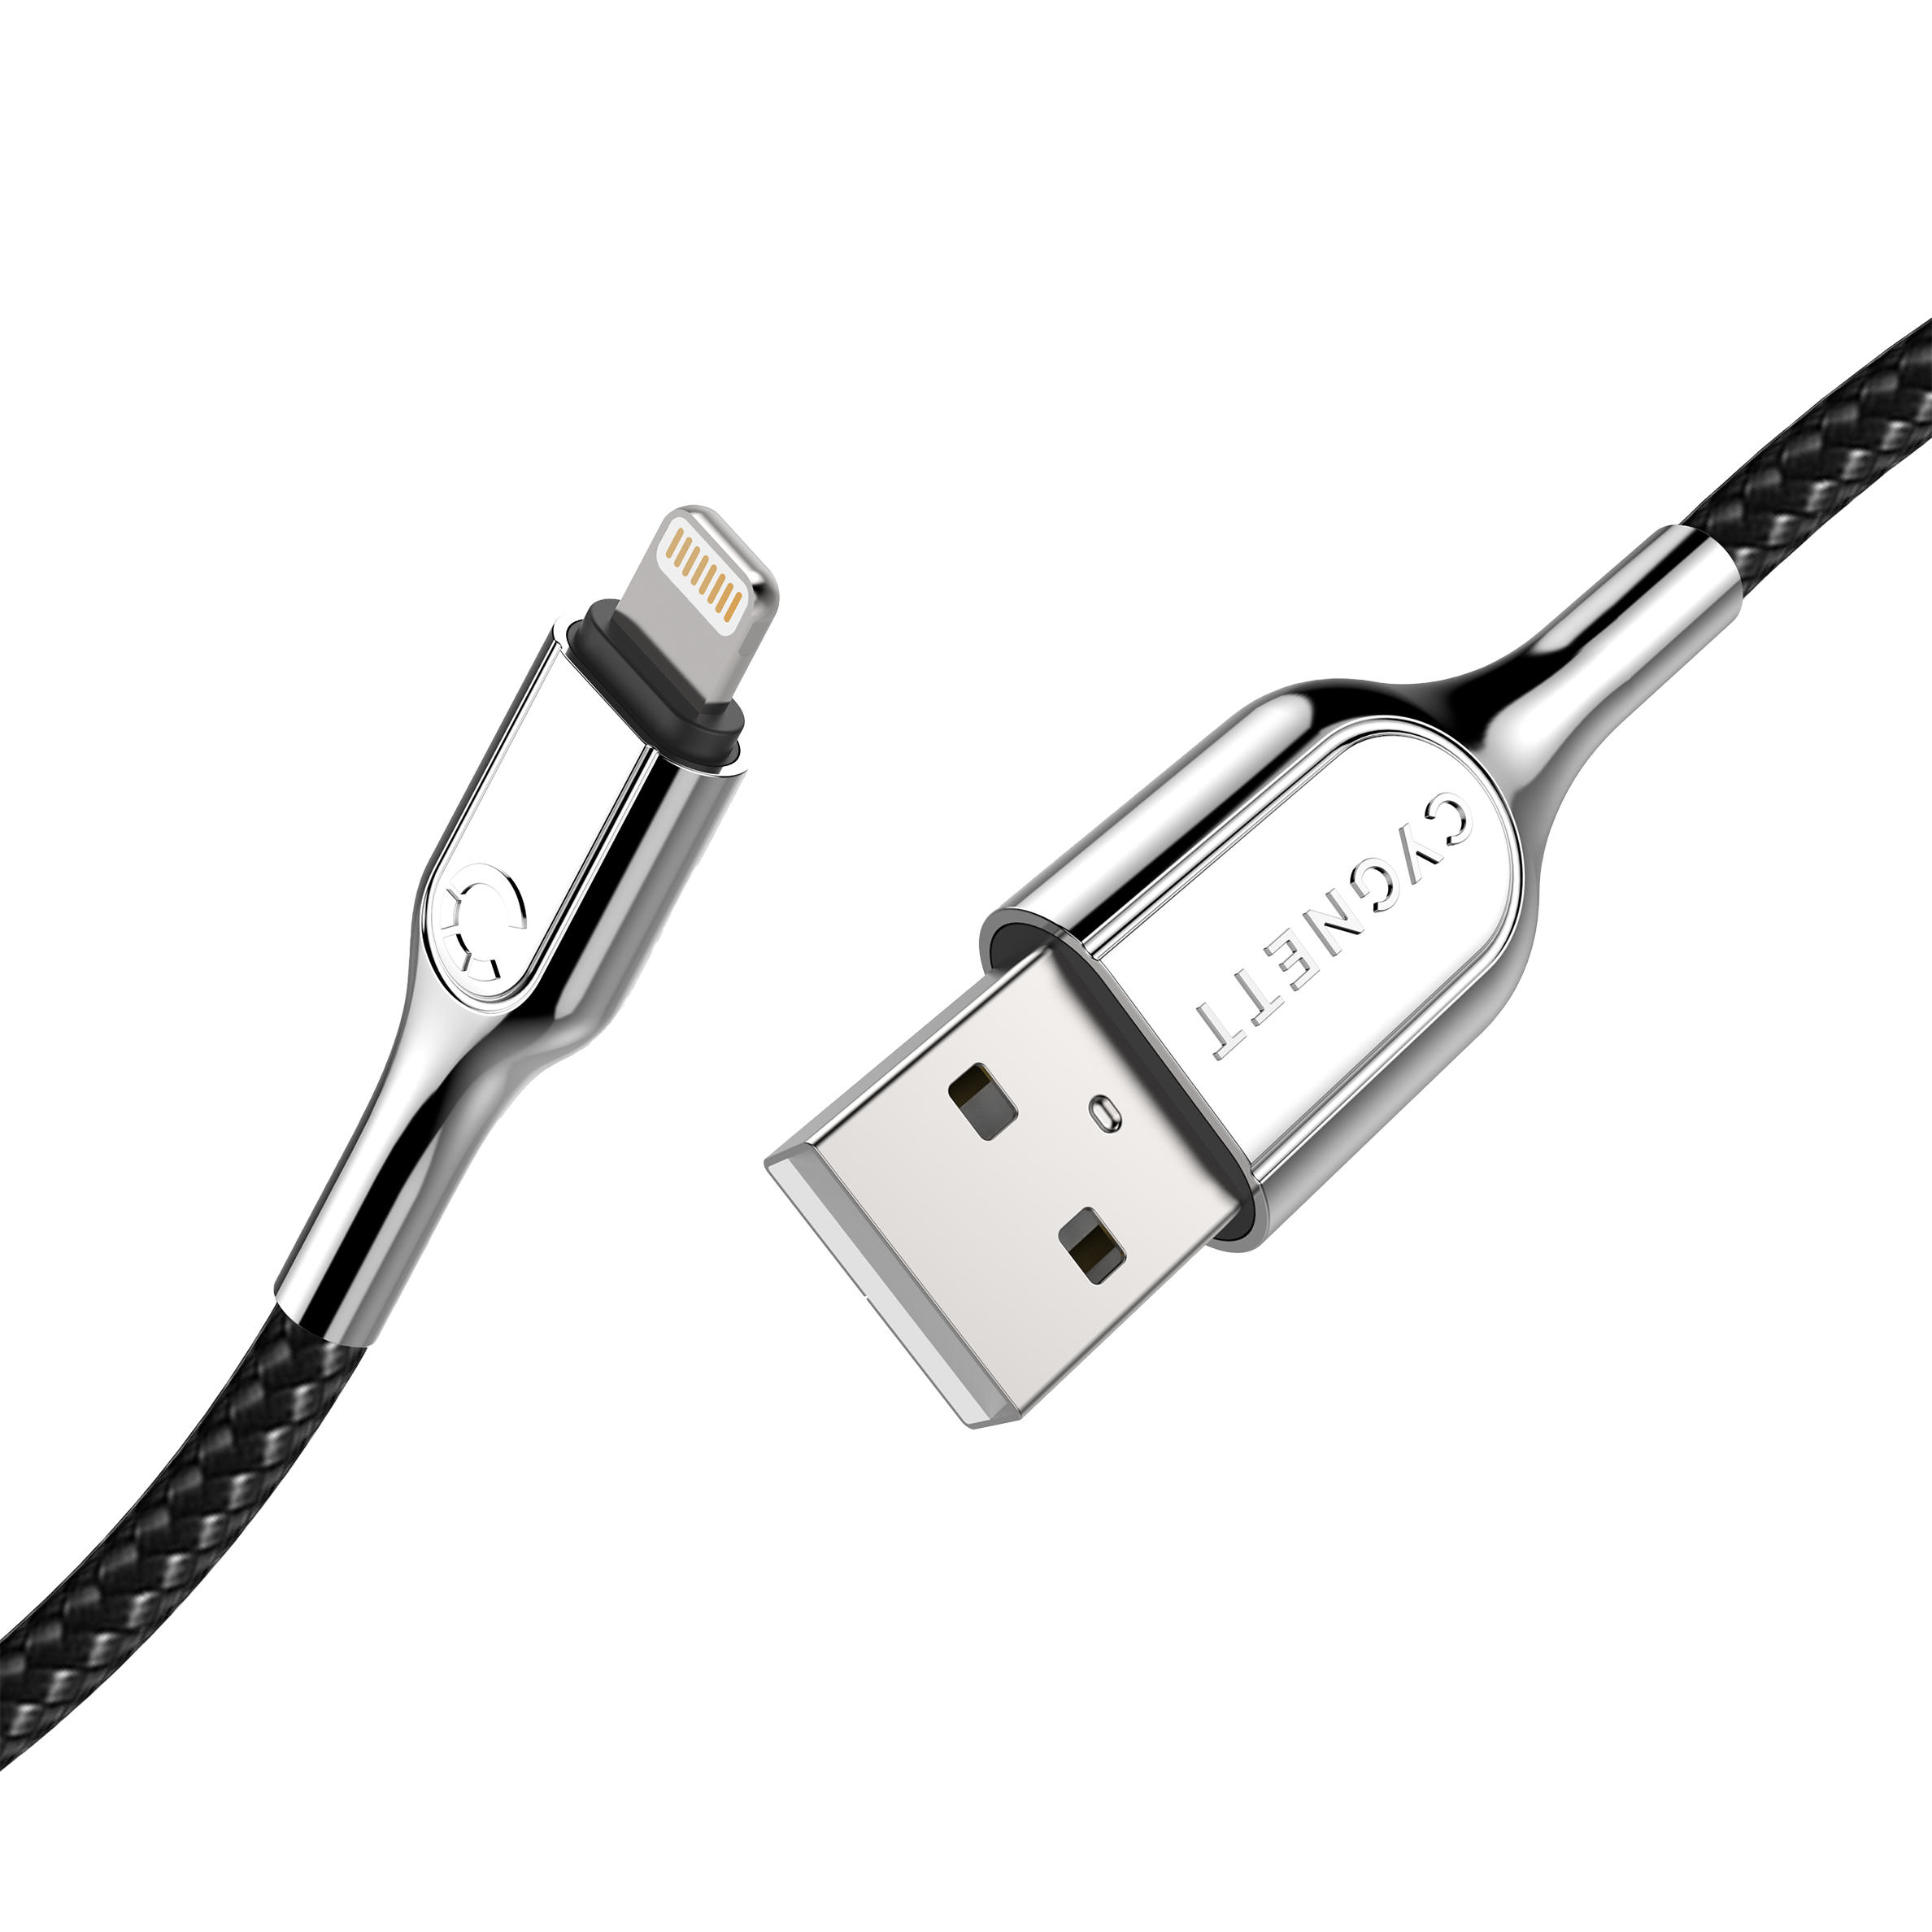 Lightning to USB-A Cable - Black 2m - Cygnett (AU)